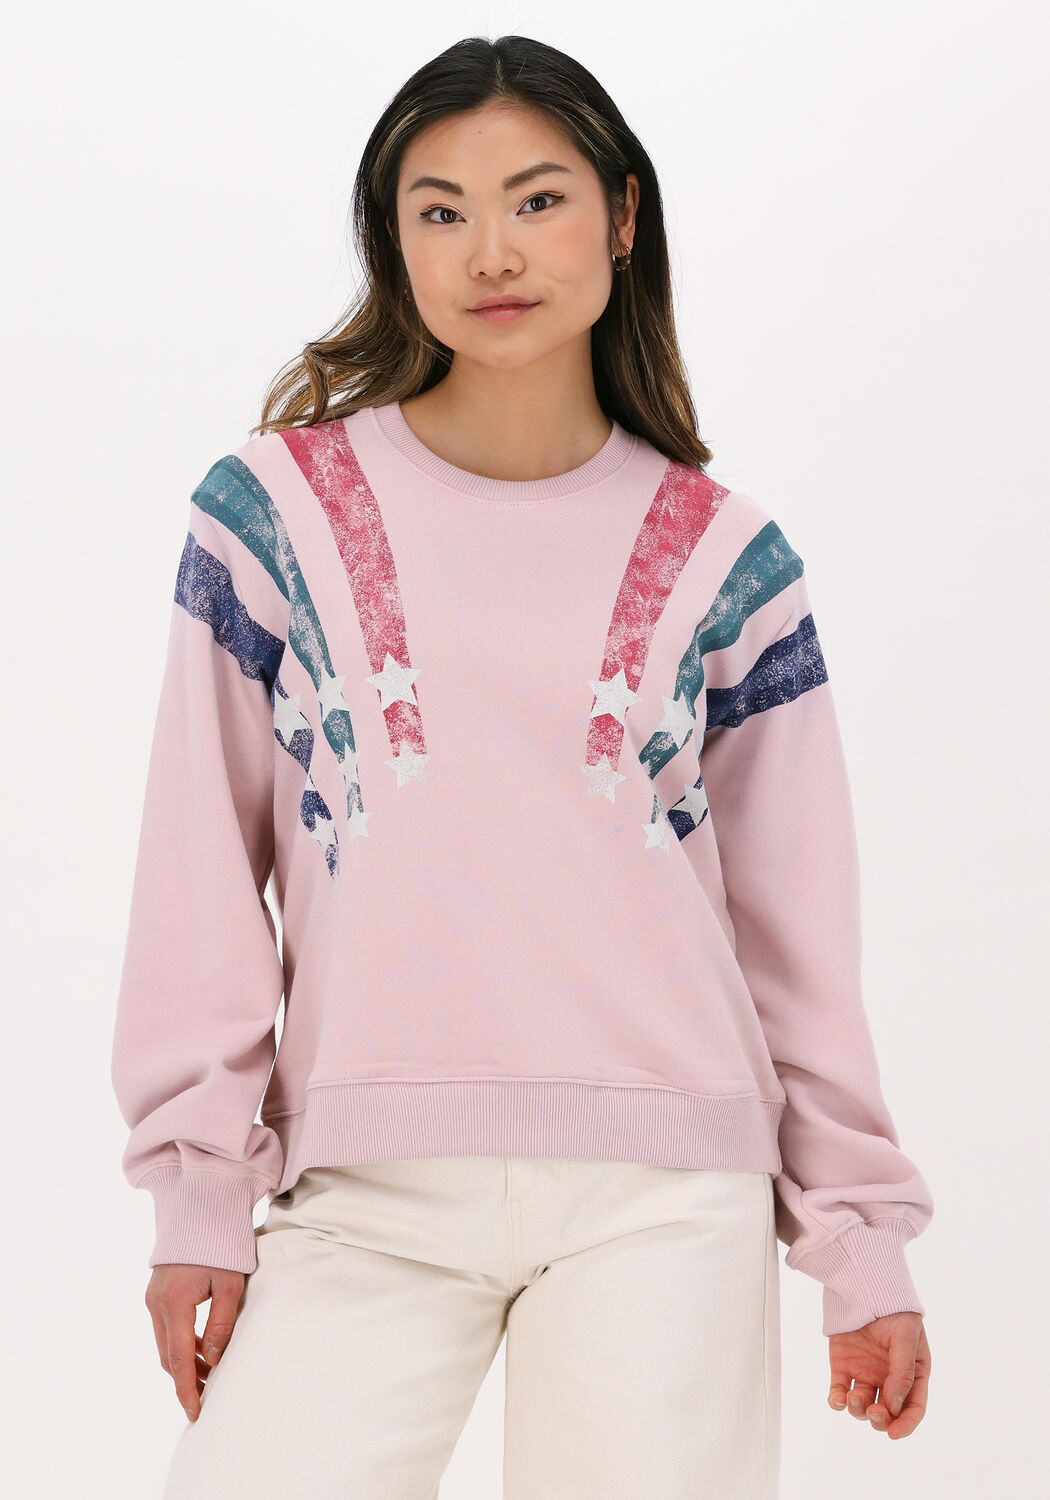 Kleding Dameskleding Sweaters Vesten Tint van Roze Harper 